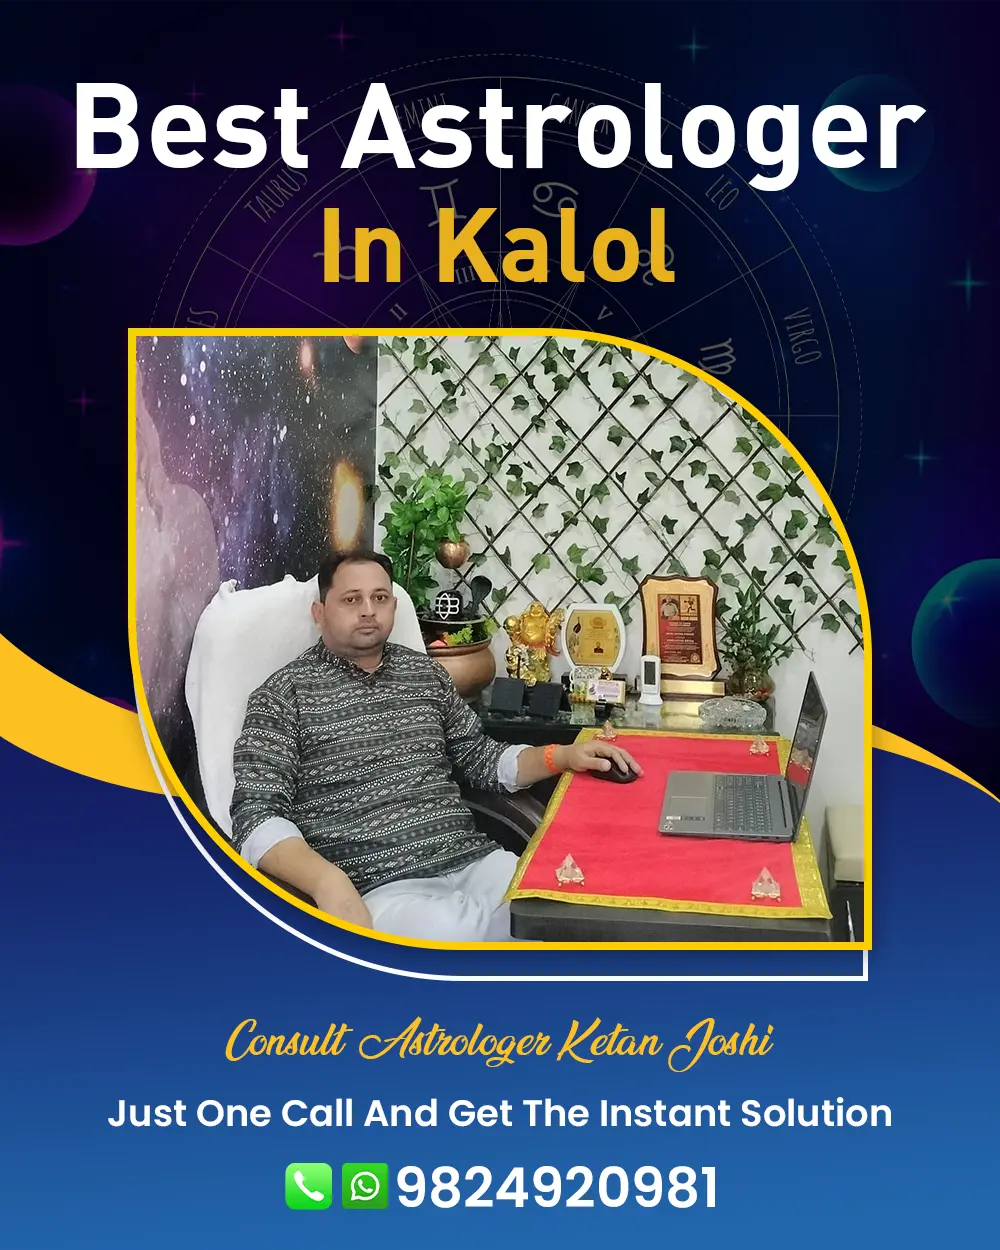 Best Astrologer In Kalol